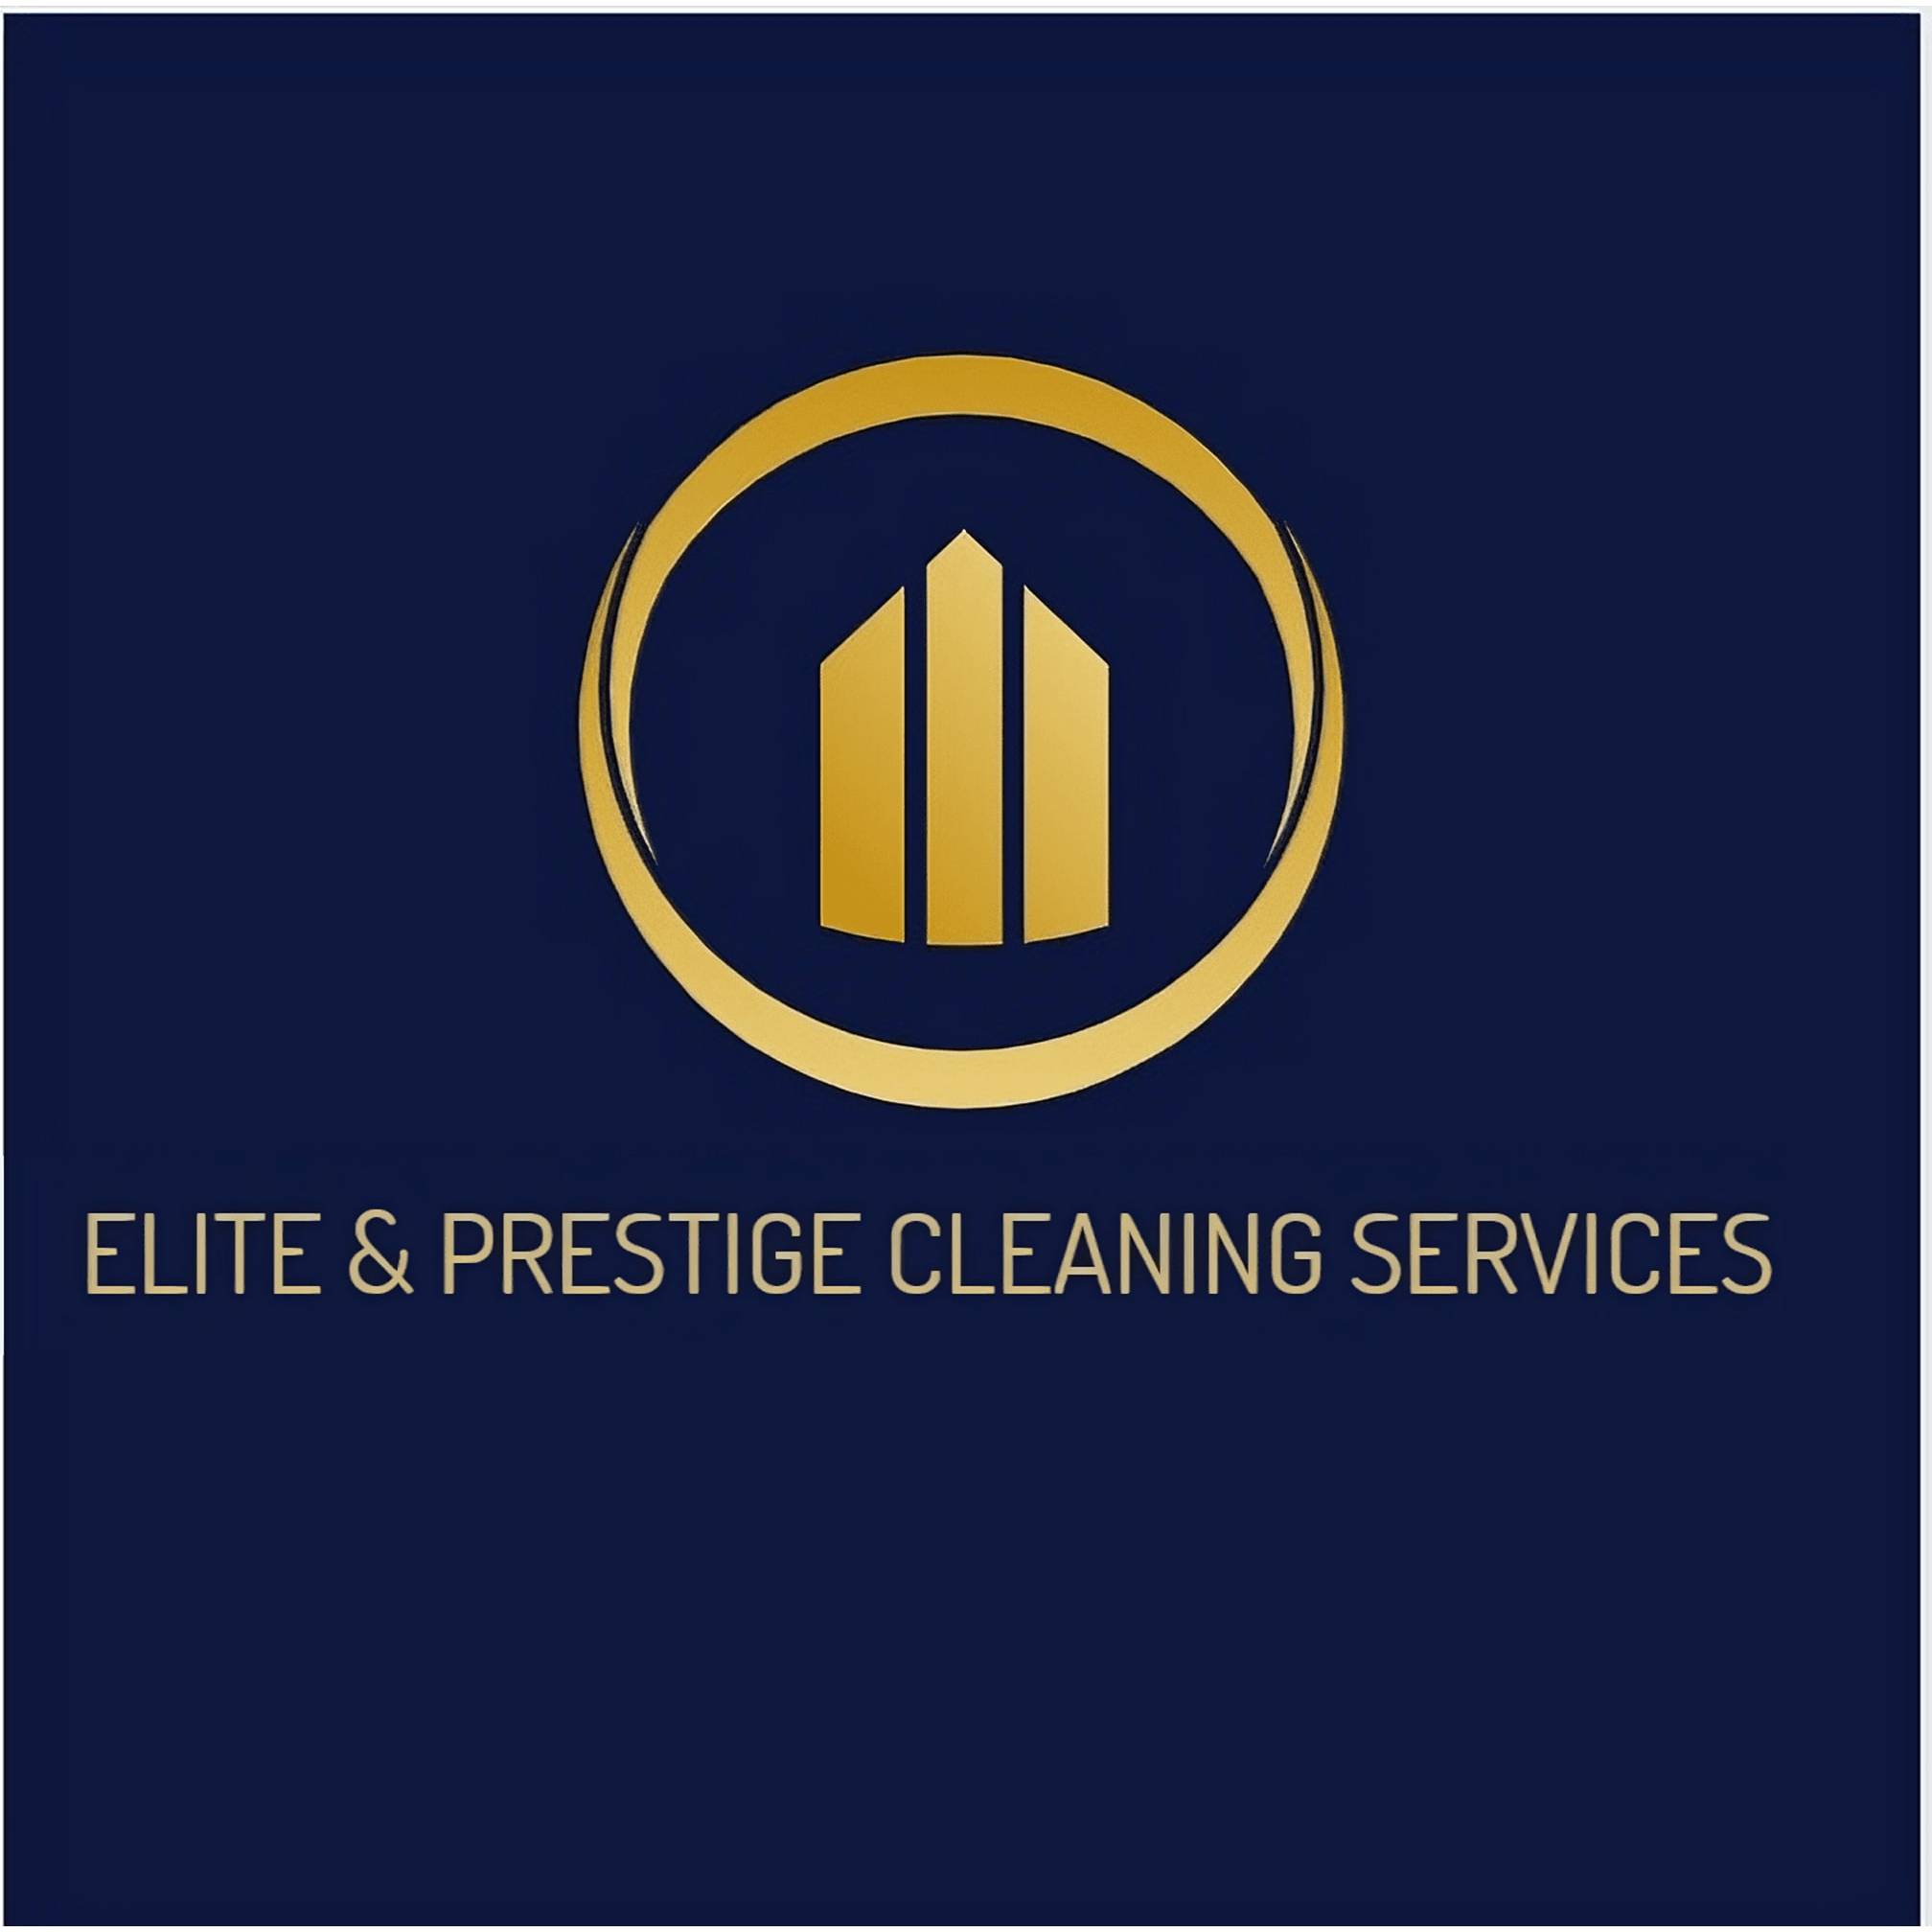 Elite Prestige Cleaning - London, London - 07990 600581 | ShowMeLocal.com